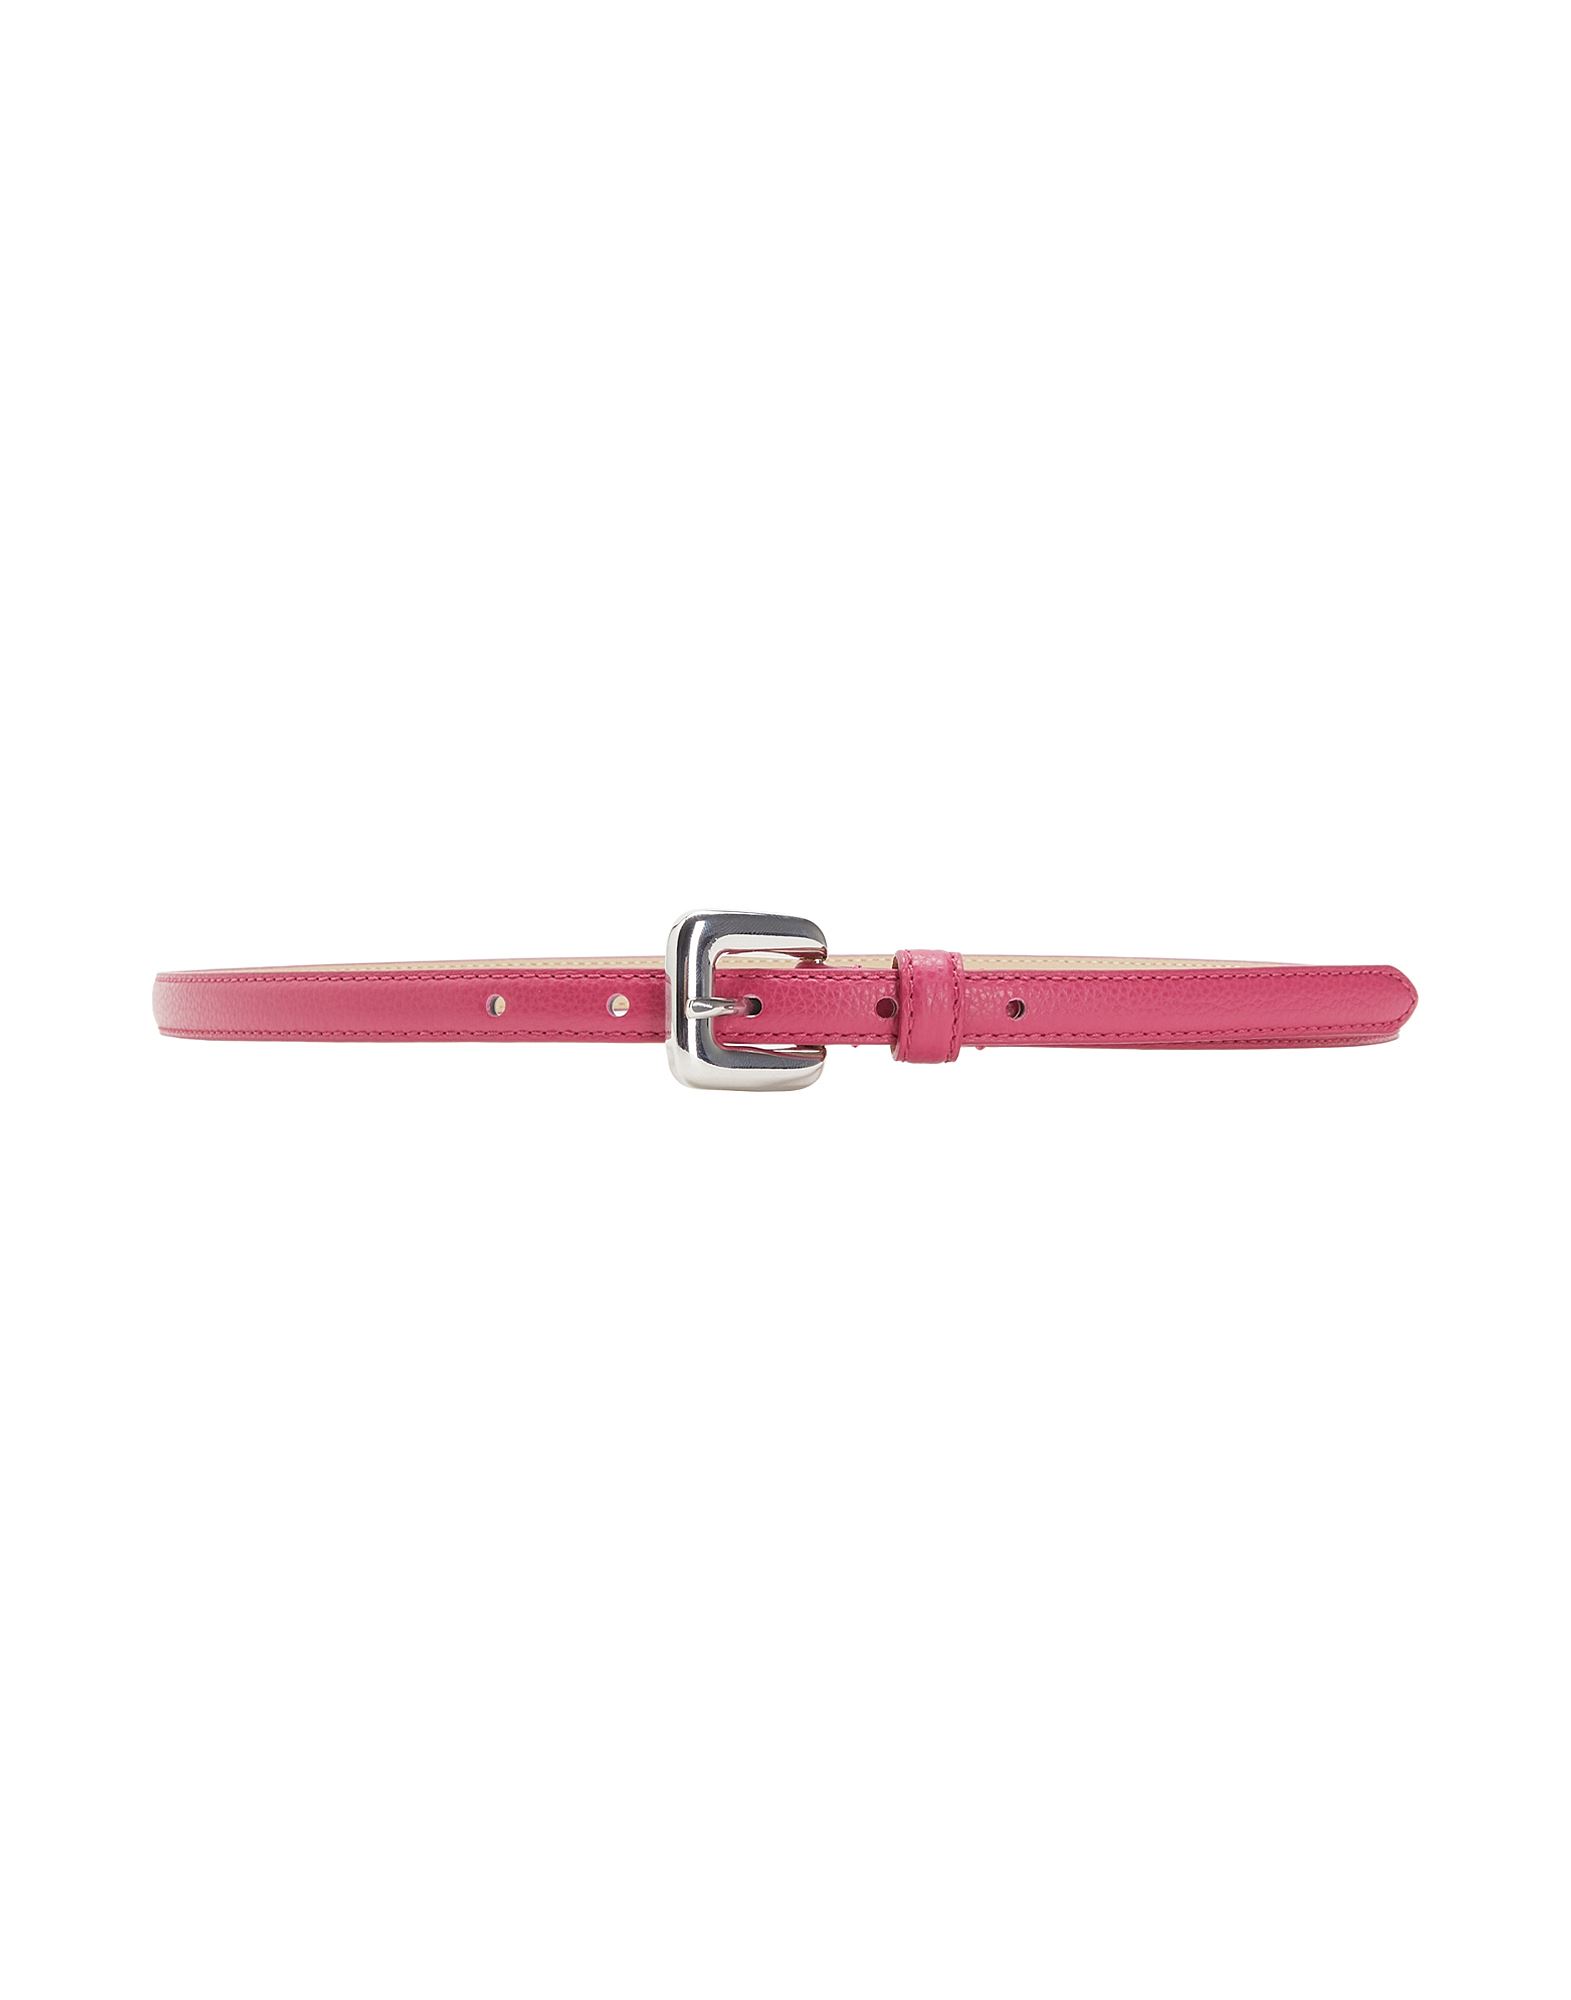 8 By Yoox Belts In Pink